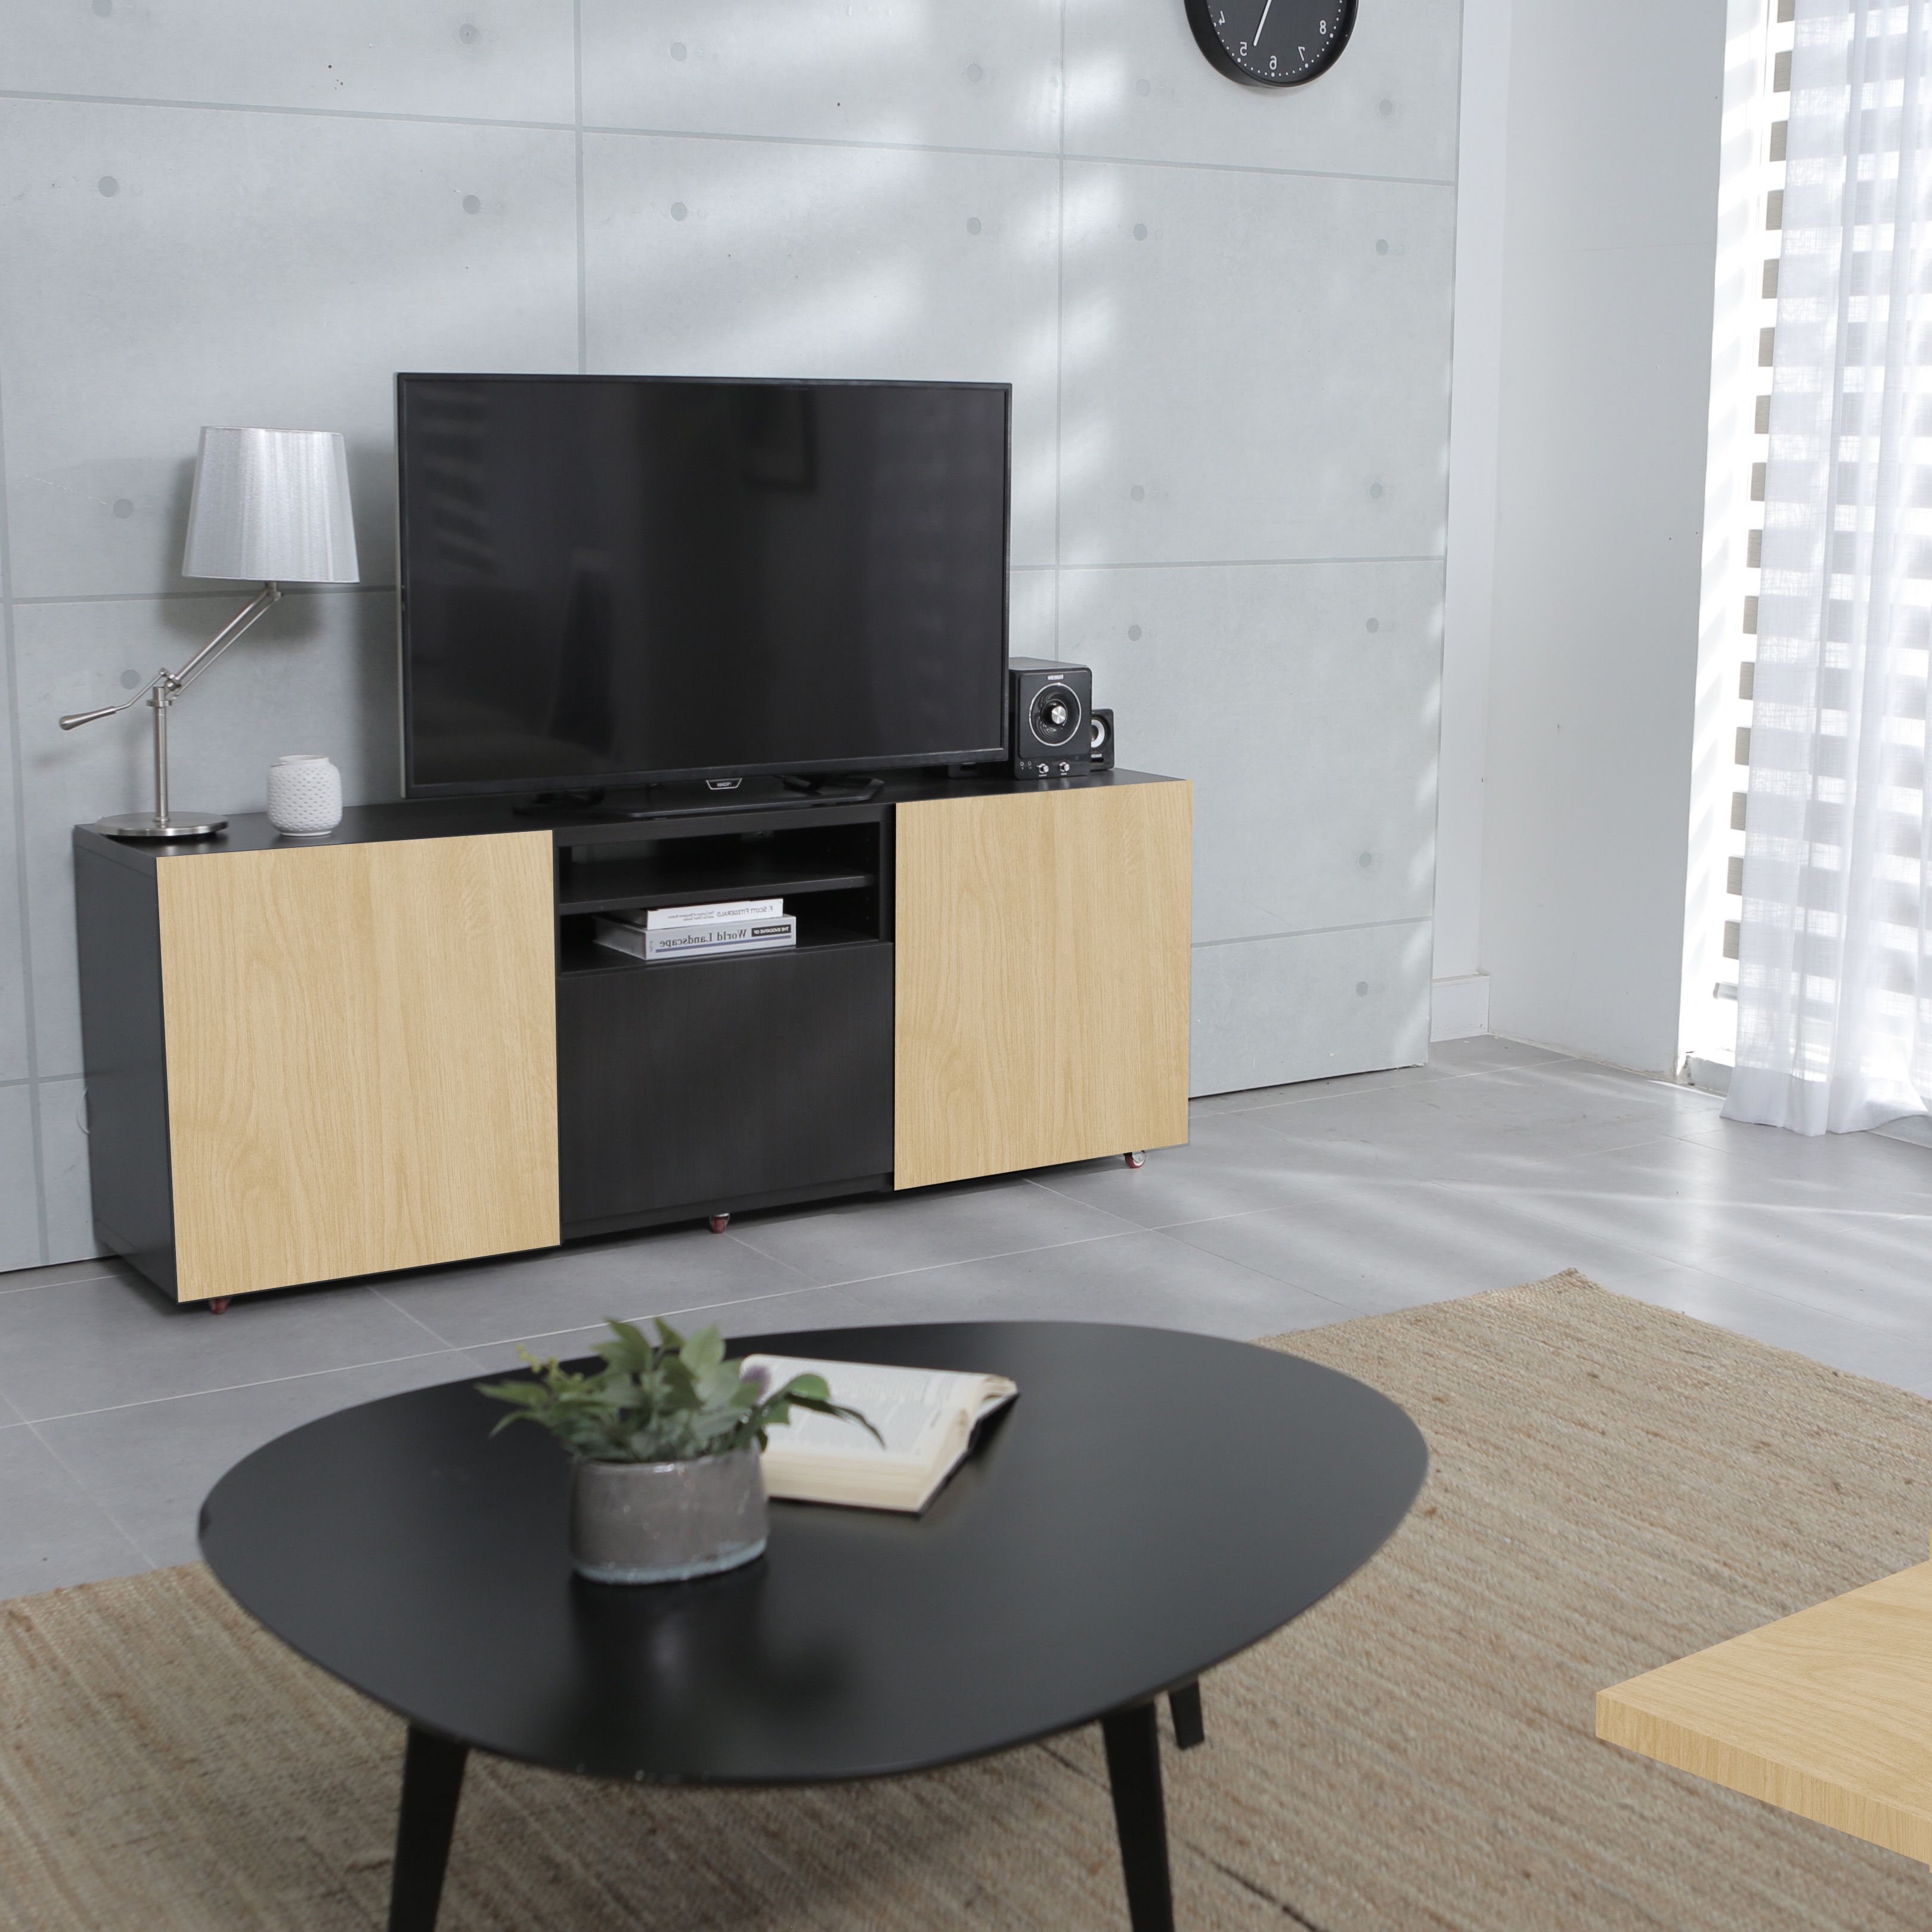 Oak effect Fully edged Furniture panel, (L)1.2m (W)300mm (T)18mm